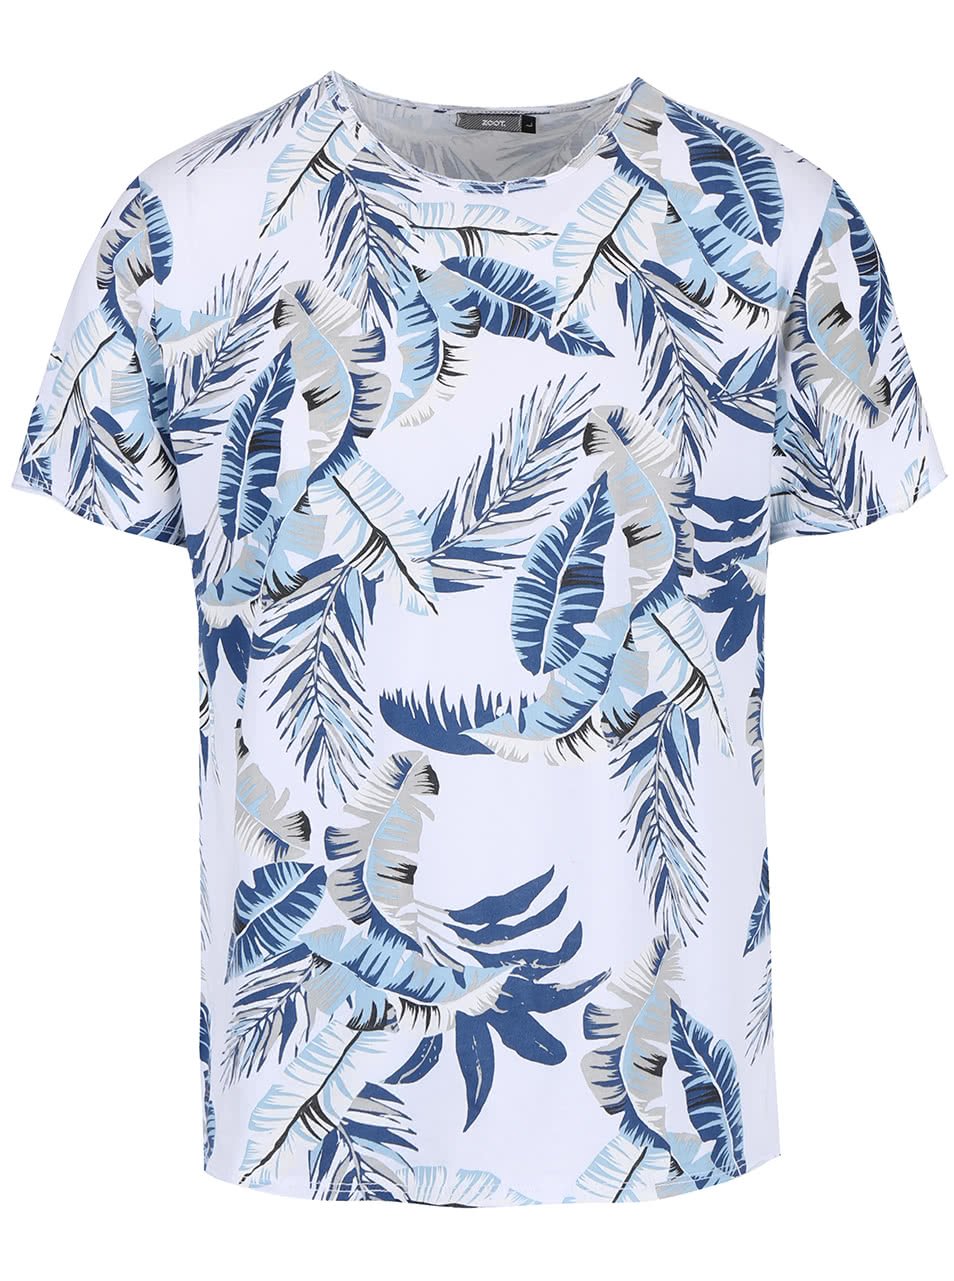 Bílé pánské triko s modrým tropickým vzorem ZOOT